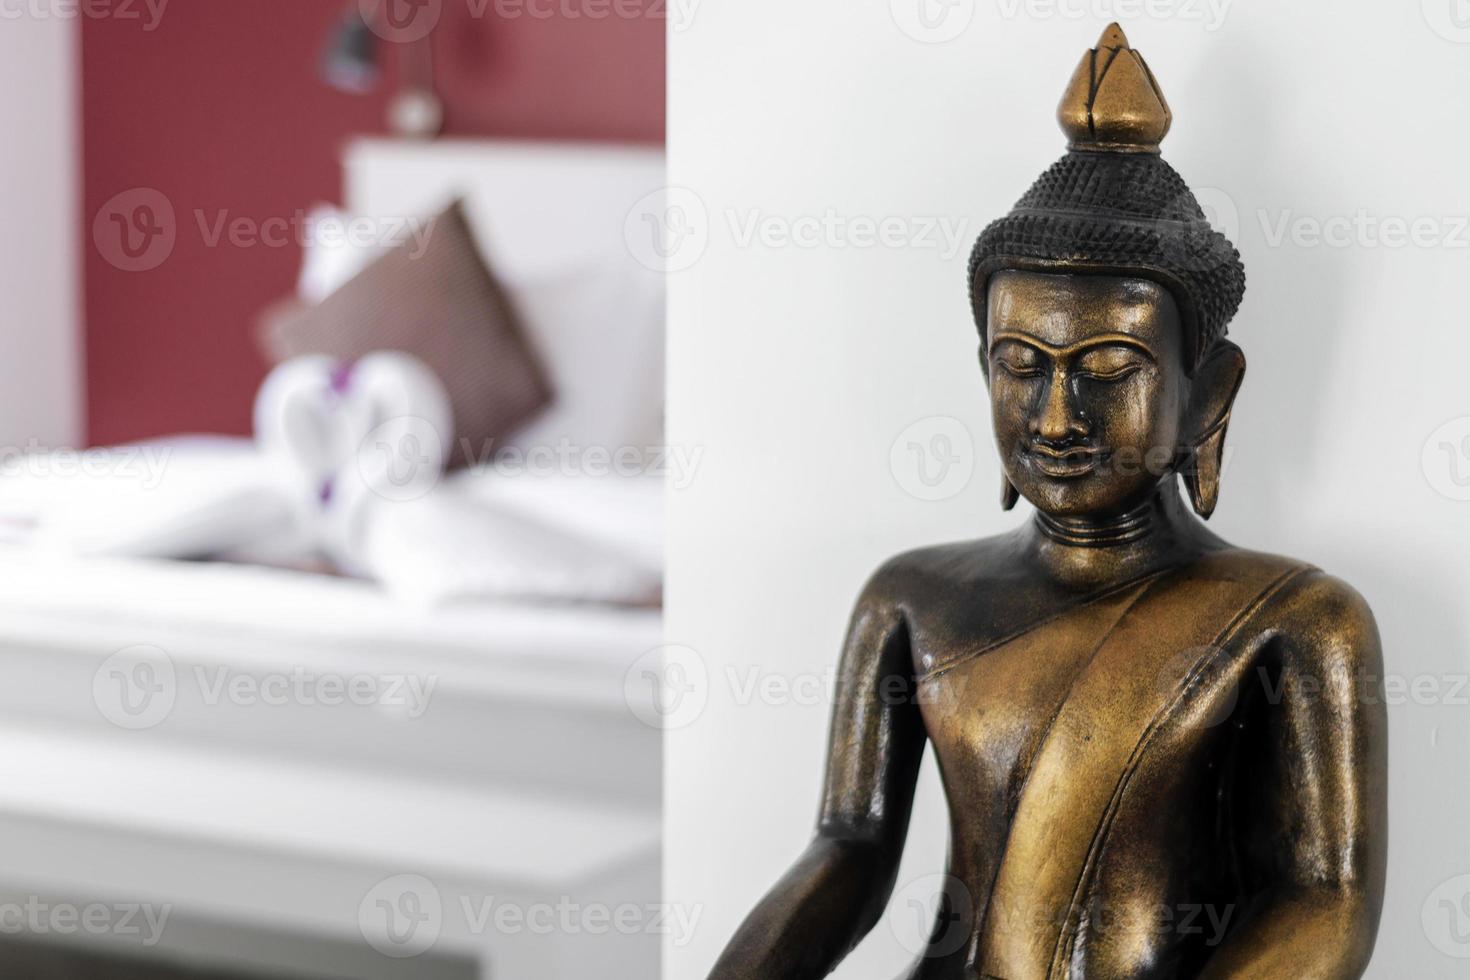 brons buddha staty inredning detalj i moderna asiatiska hem vardagsrum foto